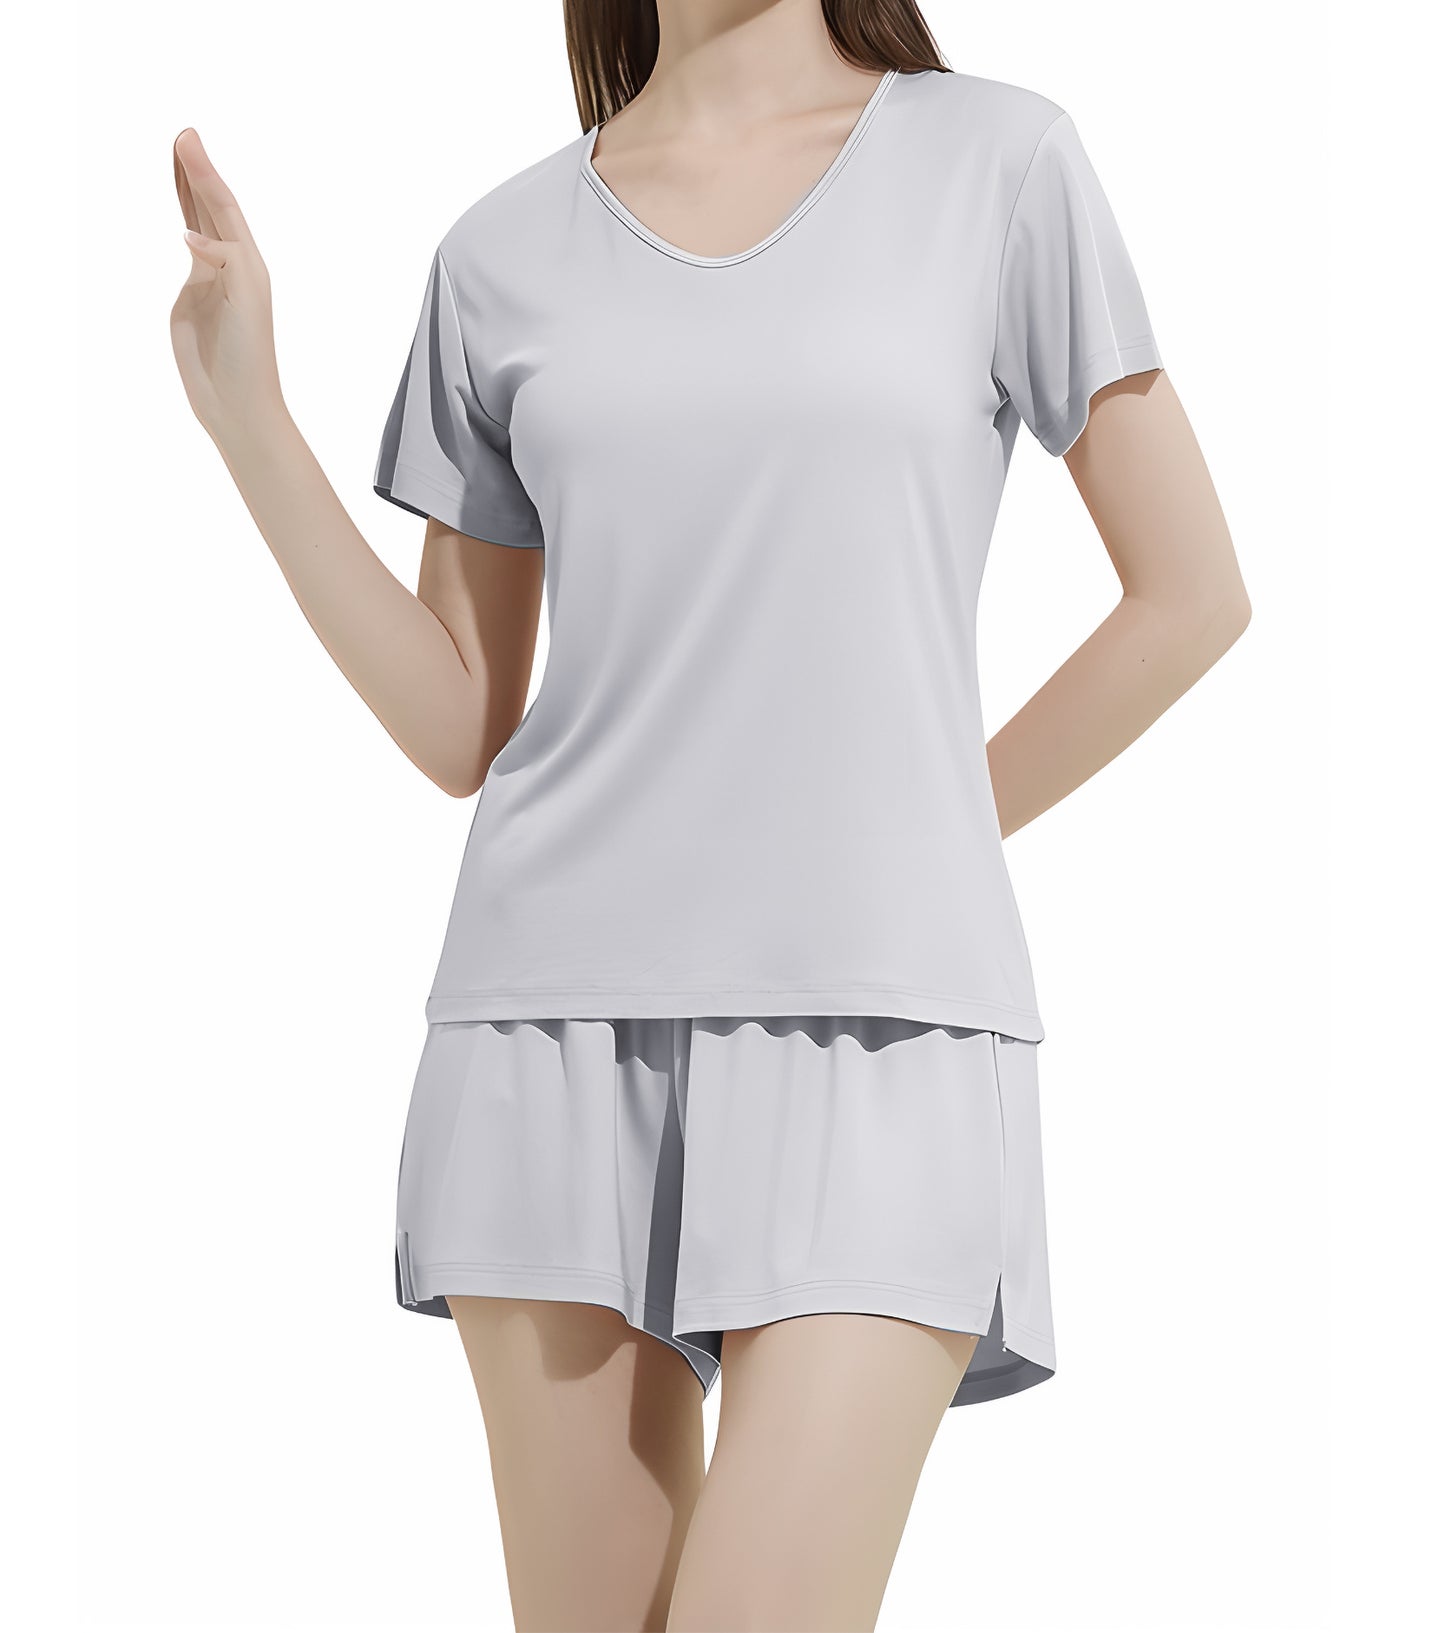 Women's Pajamas Casual Lounge Wear Comfy Sleep Outfits 2 Piece PJ Sets Gift Fabrics, Top and Shorts 2 pcs